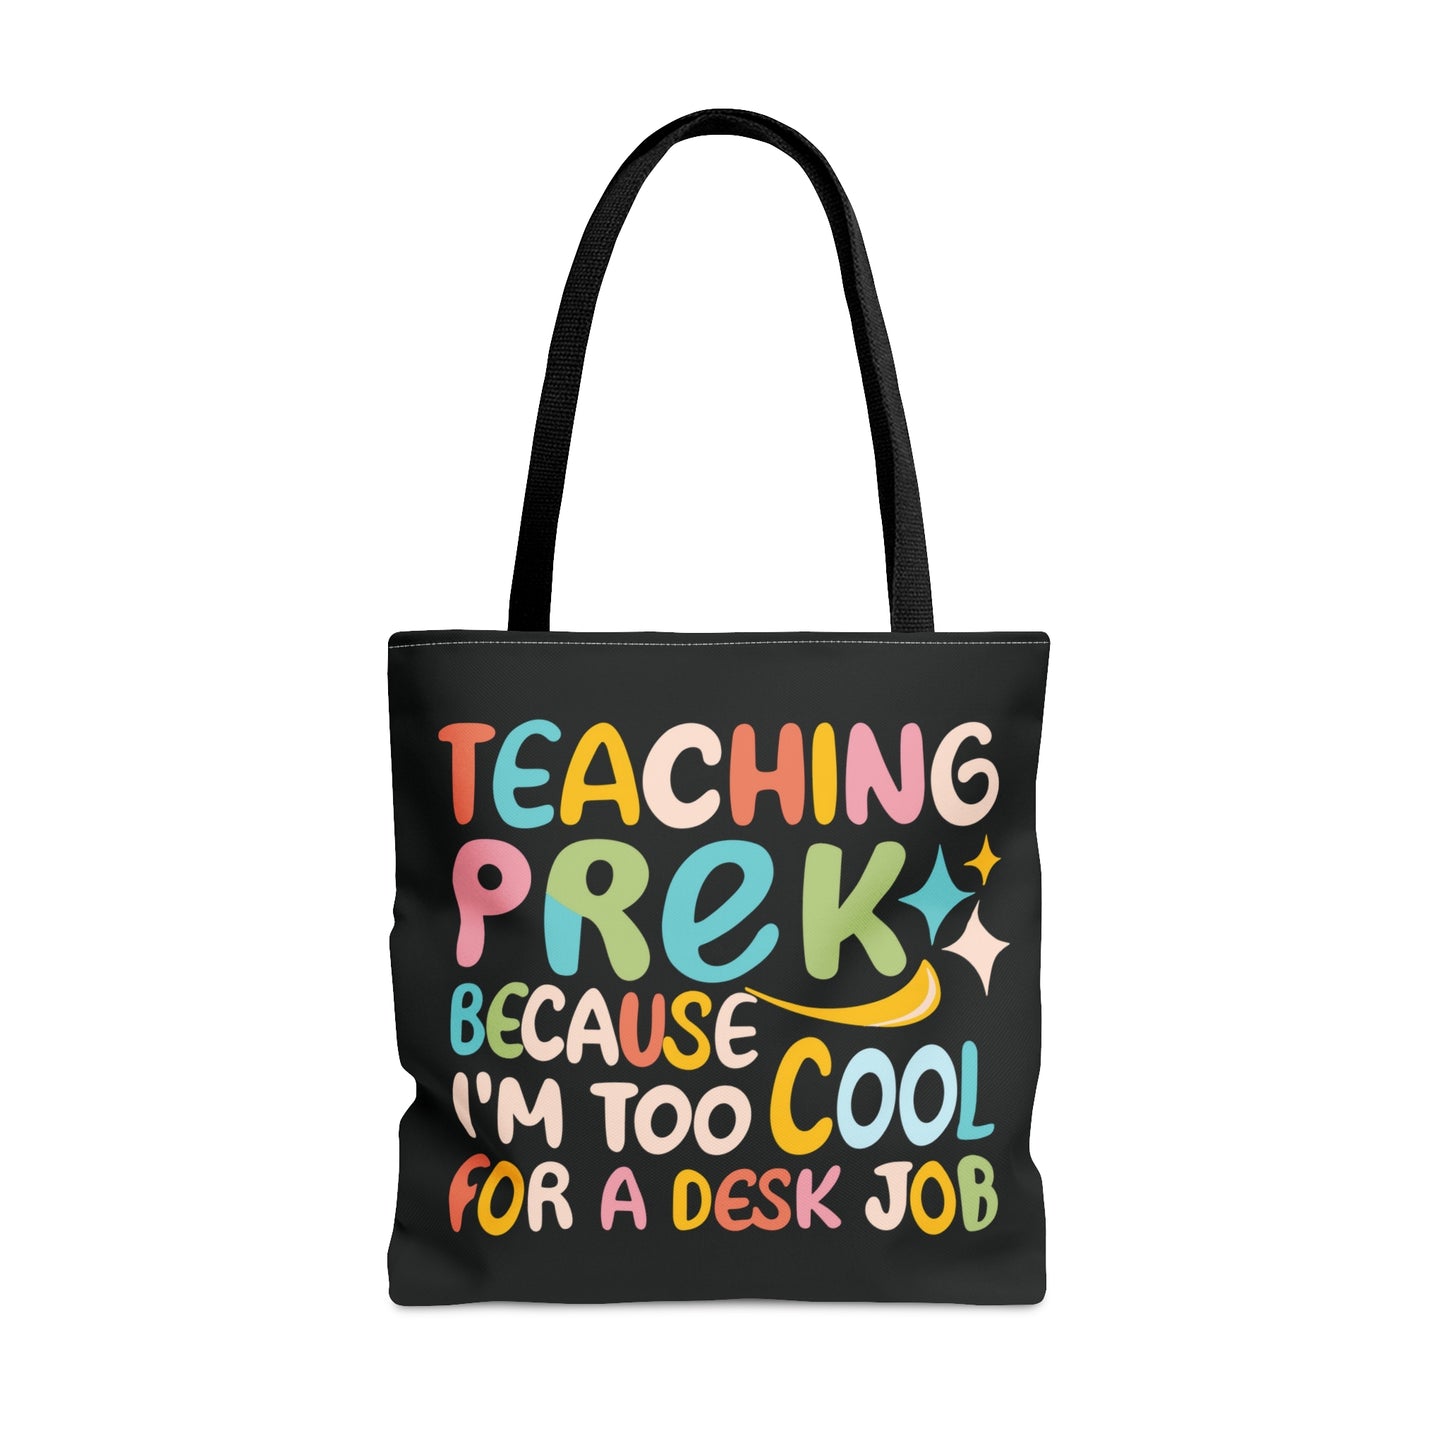 PreK Teacher Tote Bag -"Teaching PreK Because I'm Too Cool For a Desk Job"